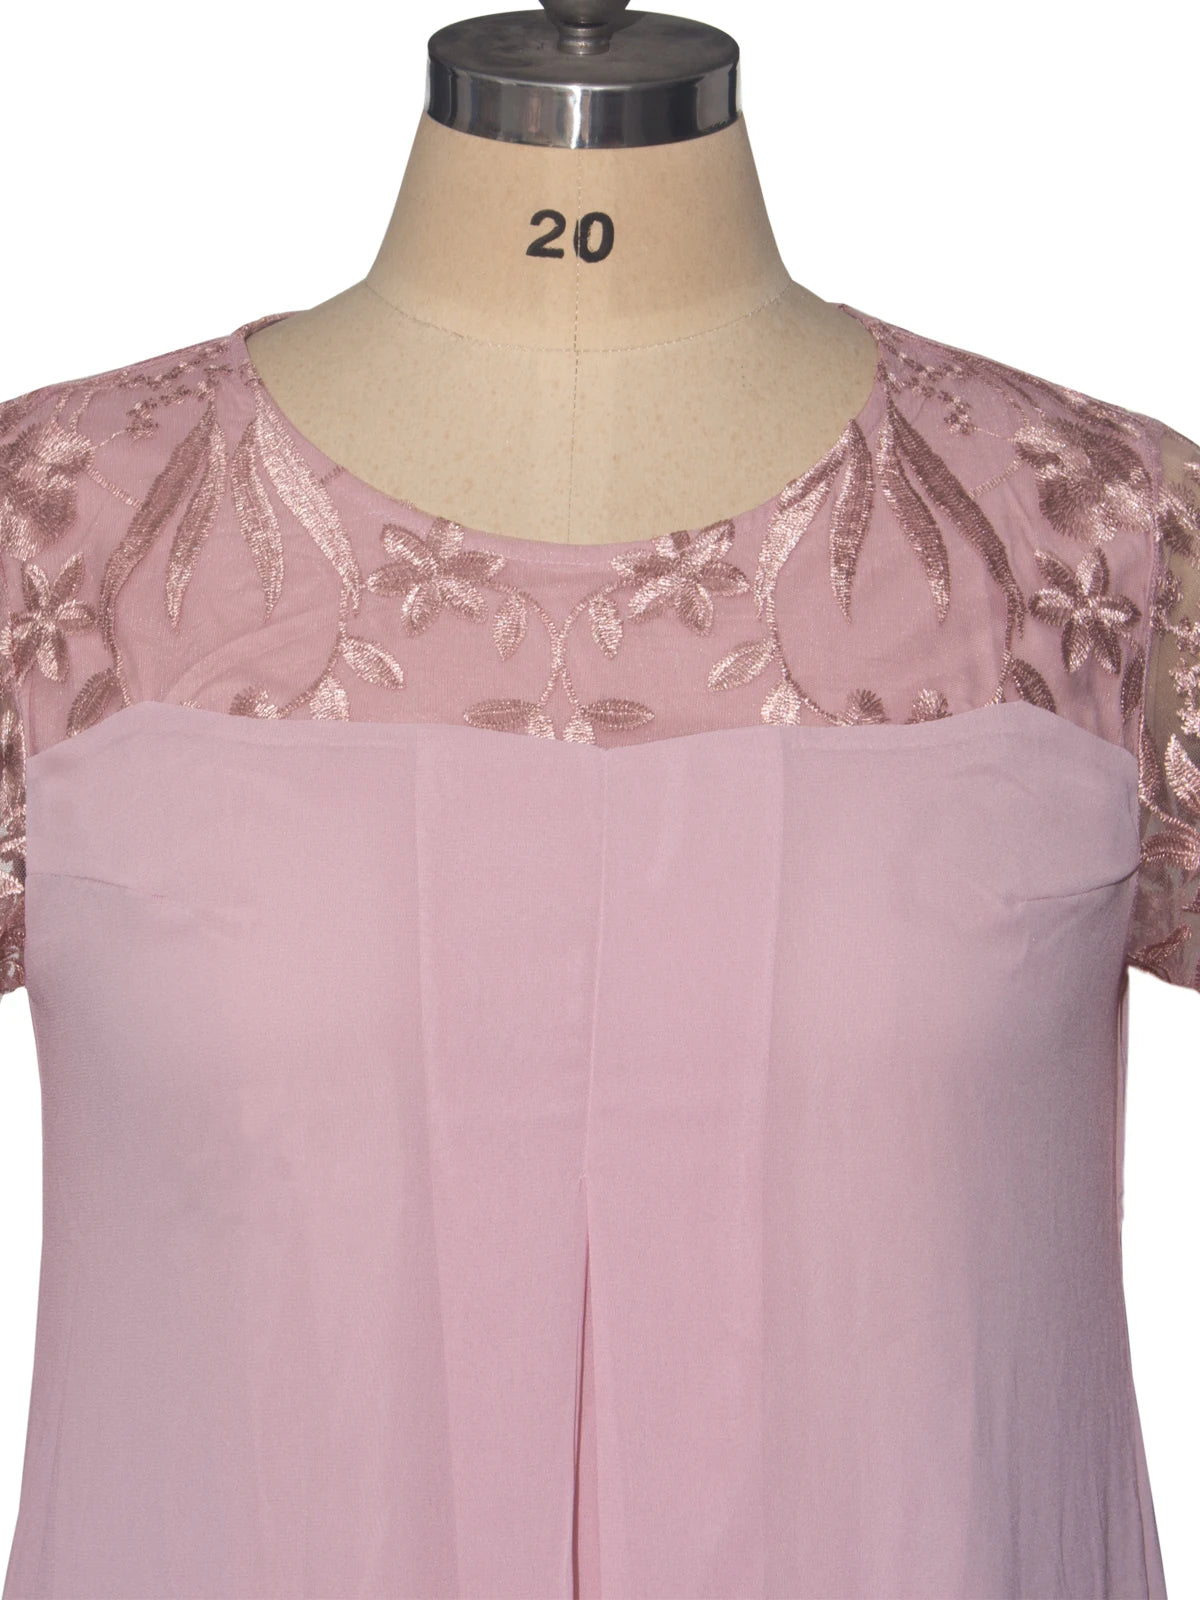 Plus Size Summer Dresses for Women 2023 - enoughdream.com